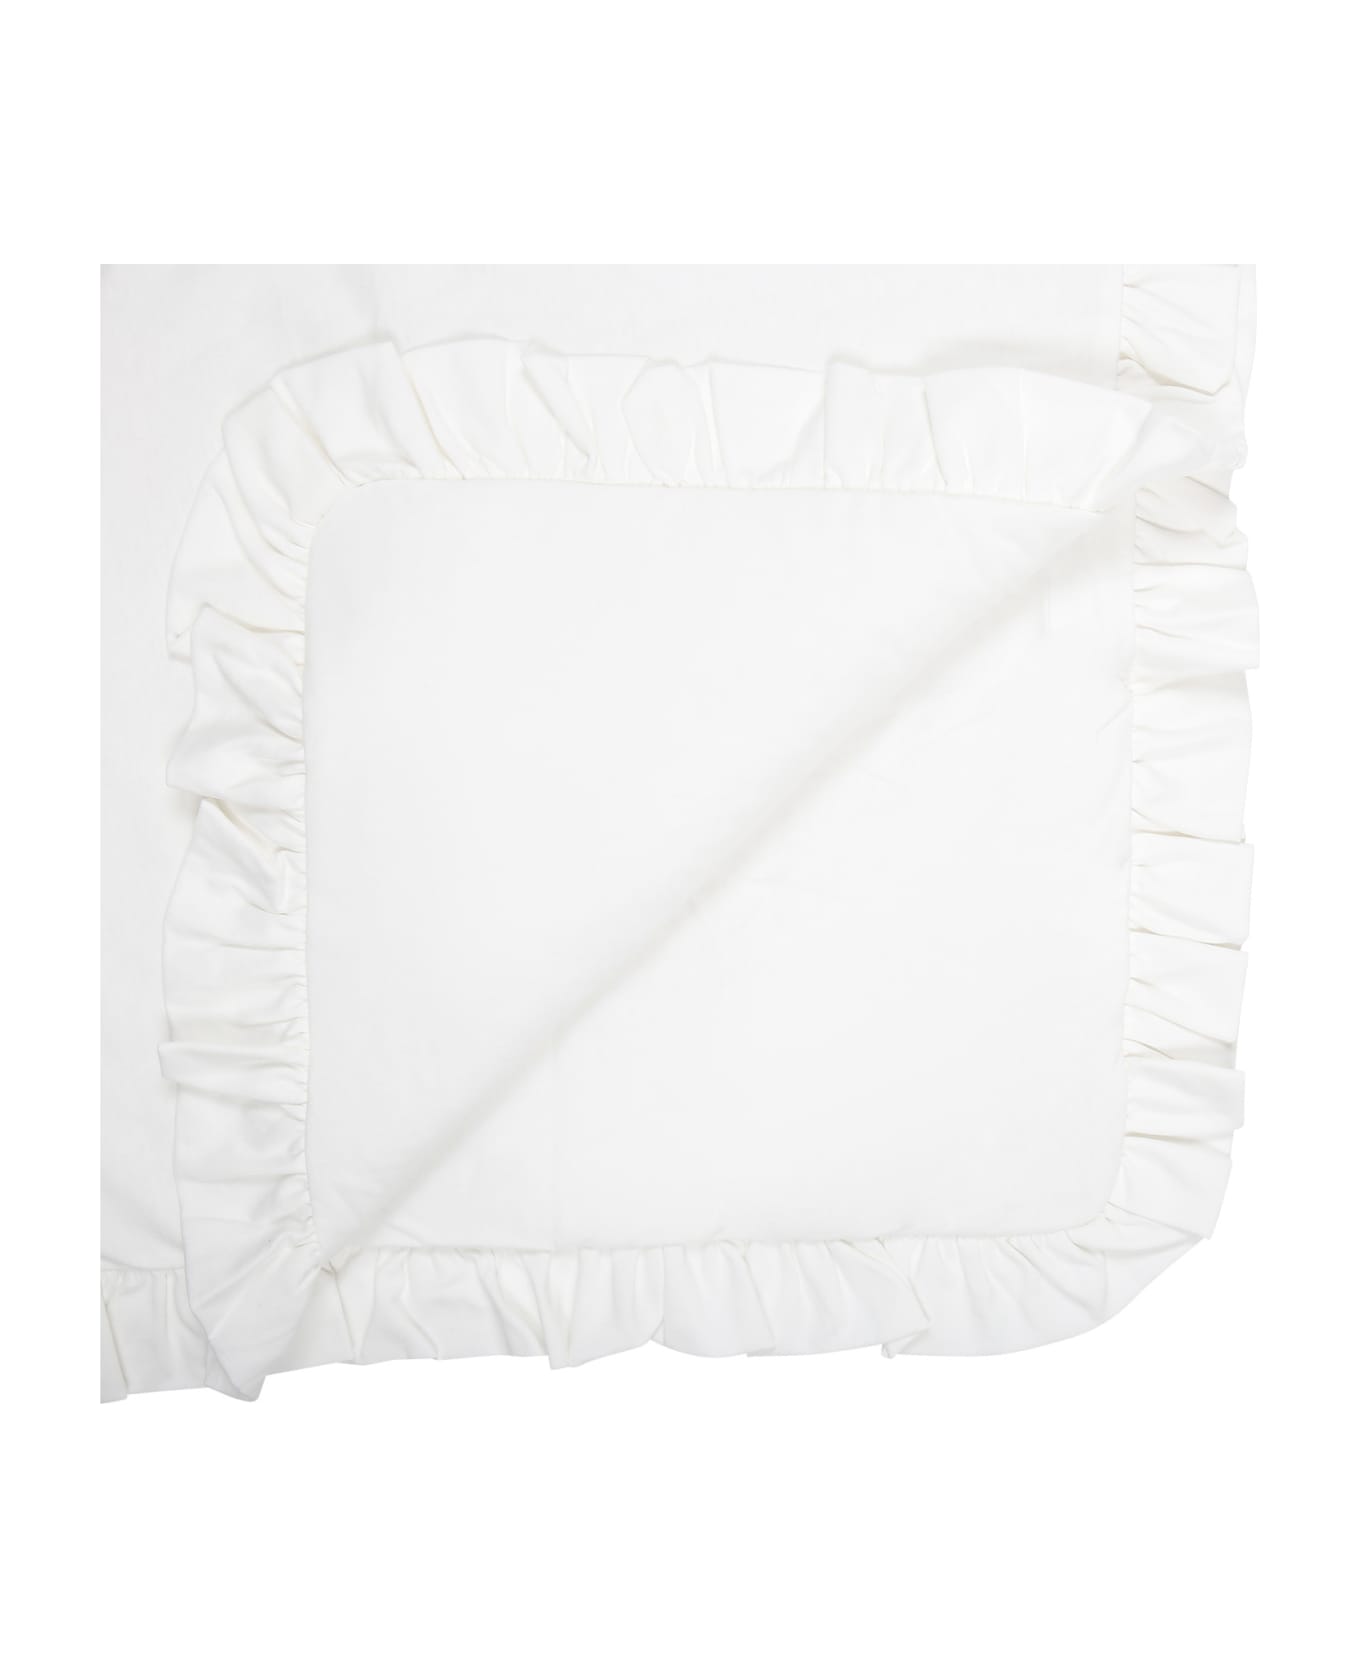 Balmain White Blanket For Baby Girl With Logo - White